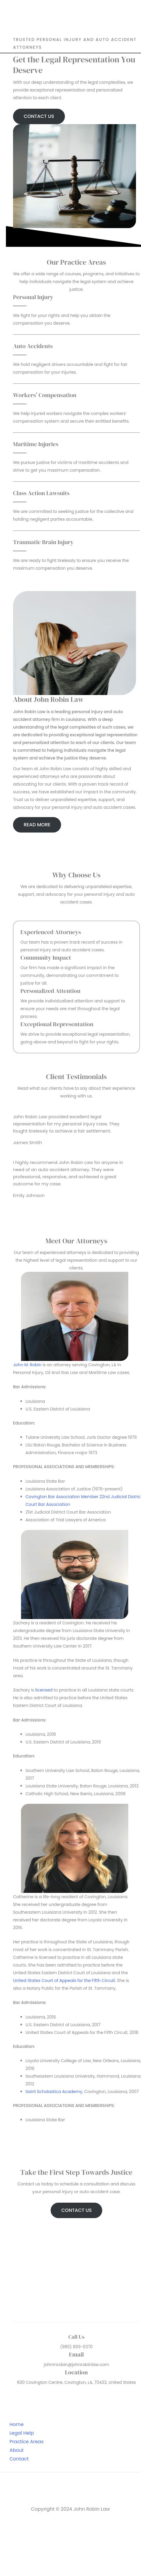 John M. Robin - Covington LA Lawyers